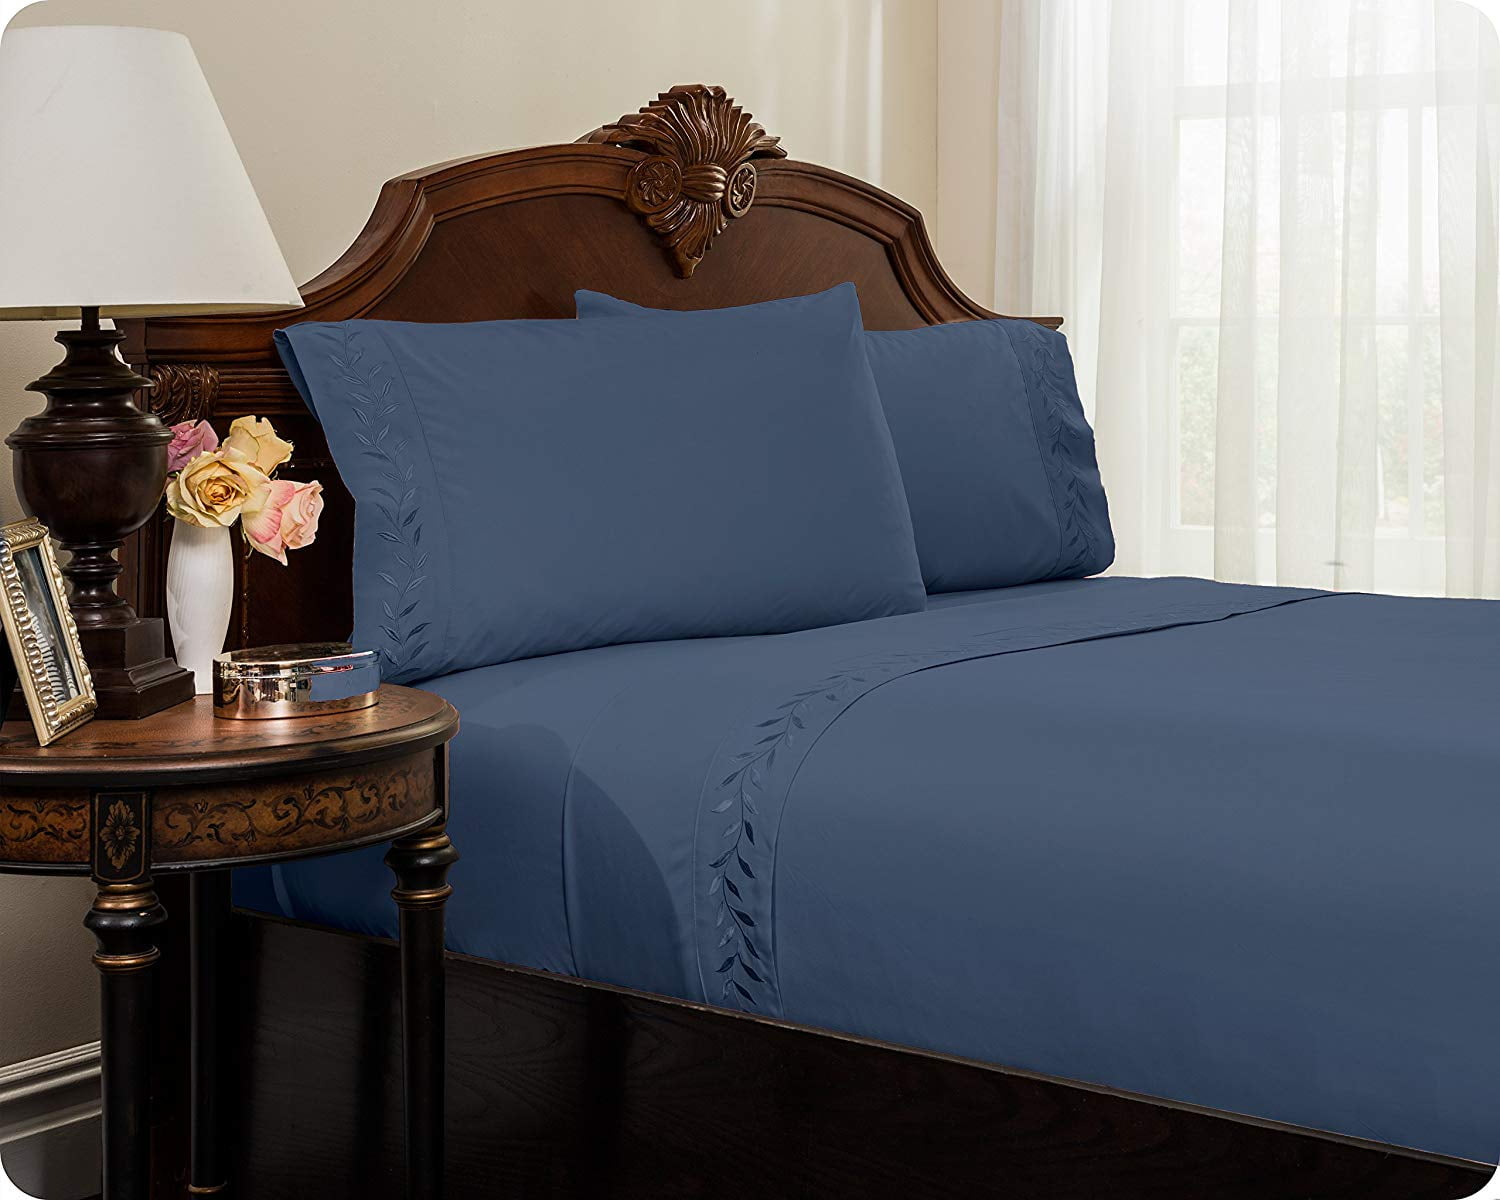 Dream Weave Microfiber White Bed Sheets – Supreme Comfort Edition – Thalsun